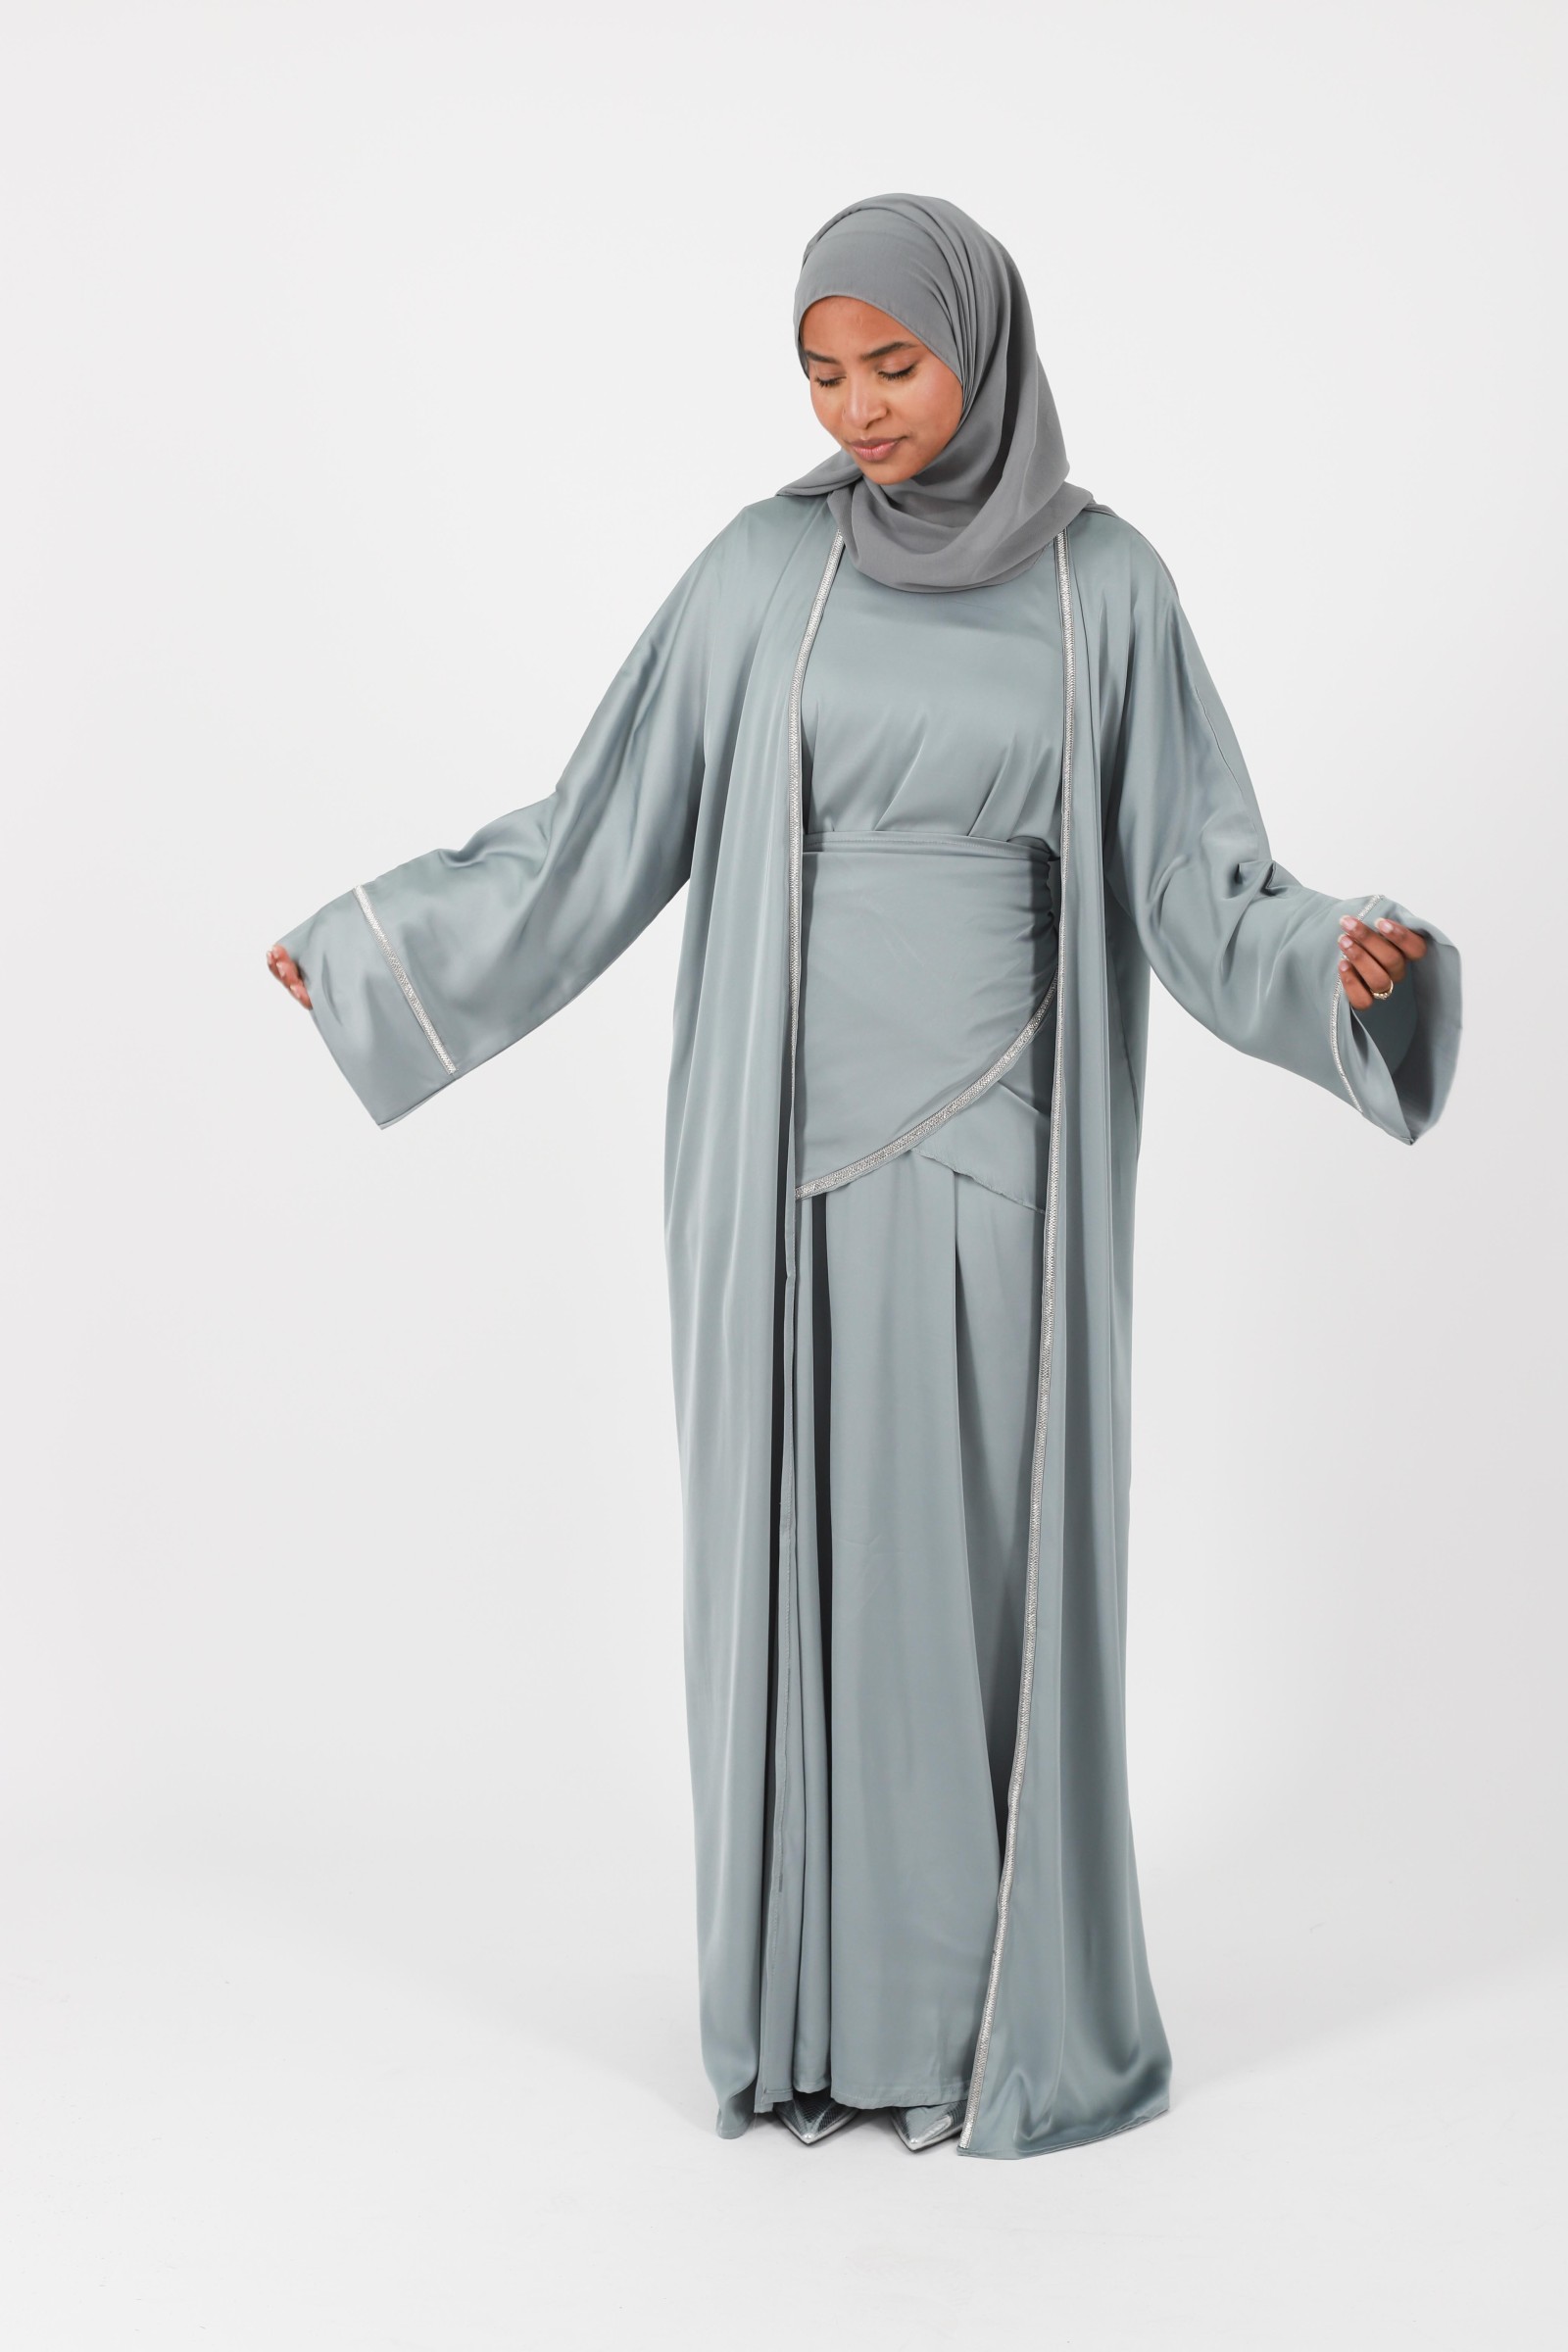 3-piece Abaya dubai set for modest and elegant women